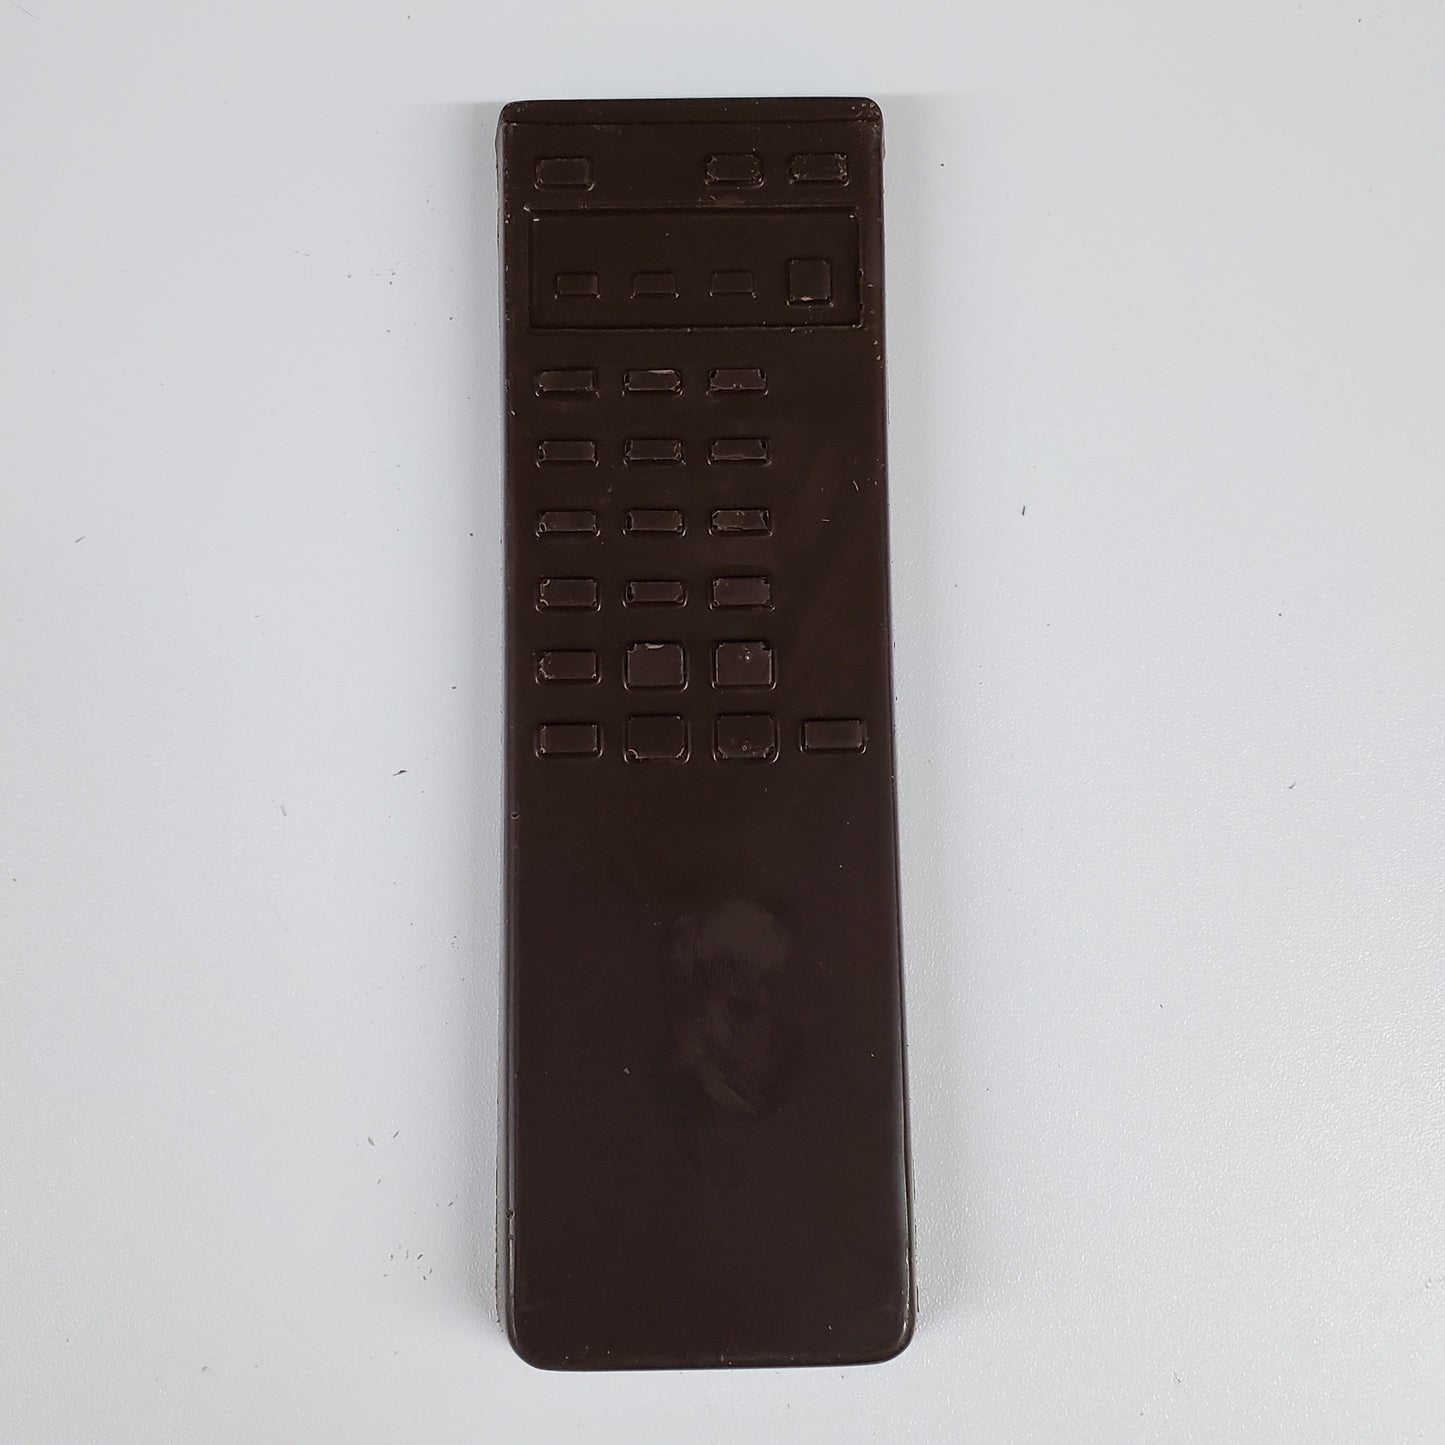 Dark Chocolate Shaped Remote Control